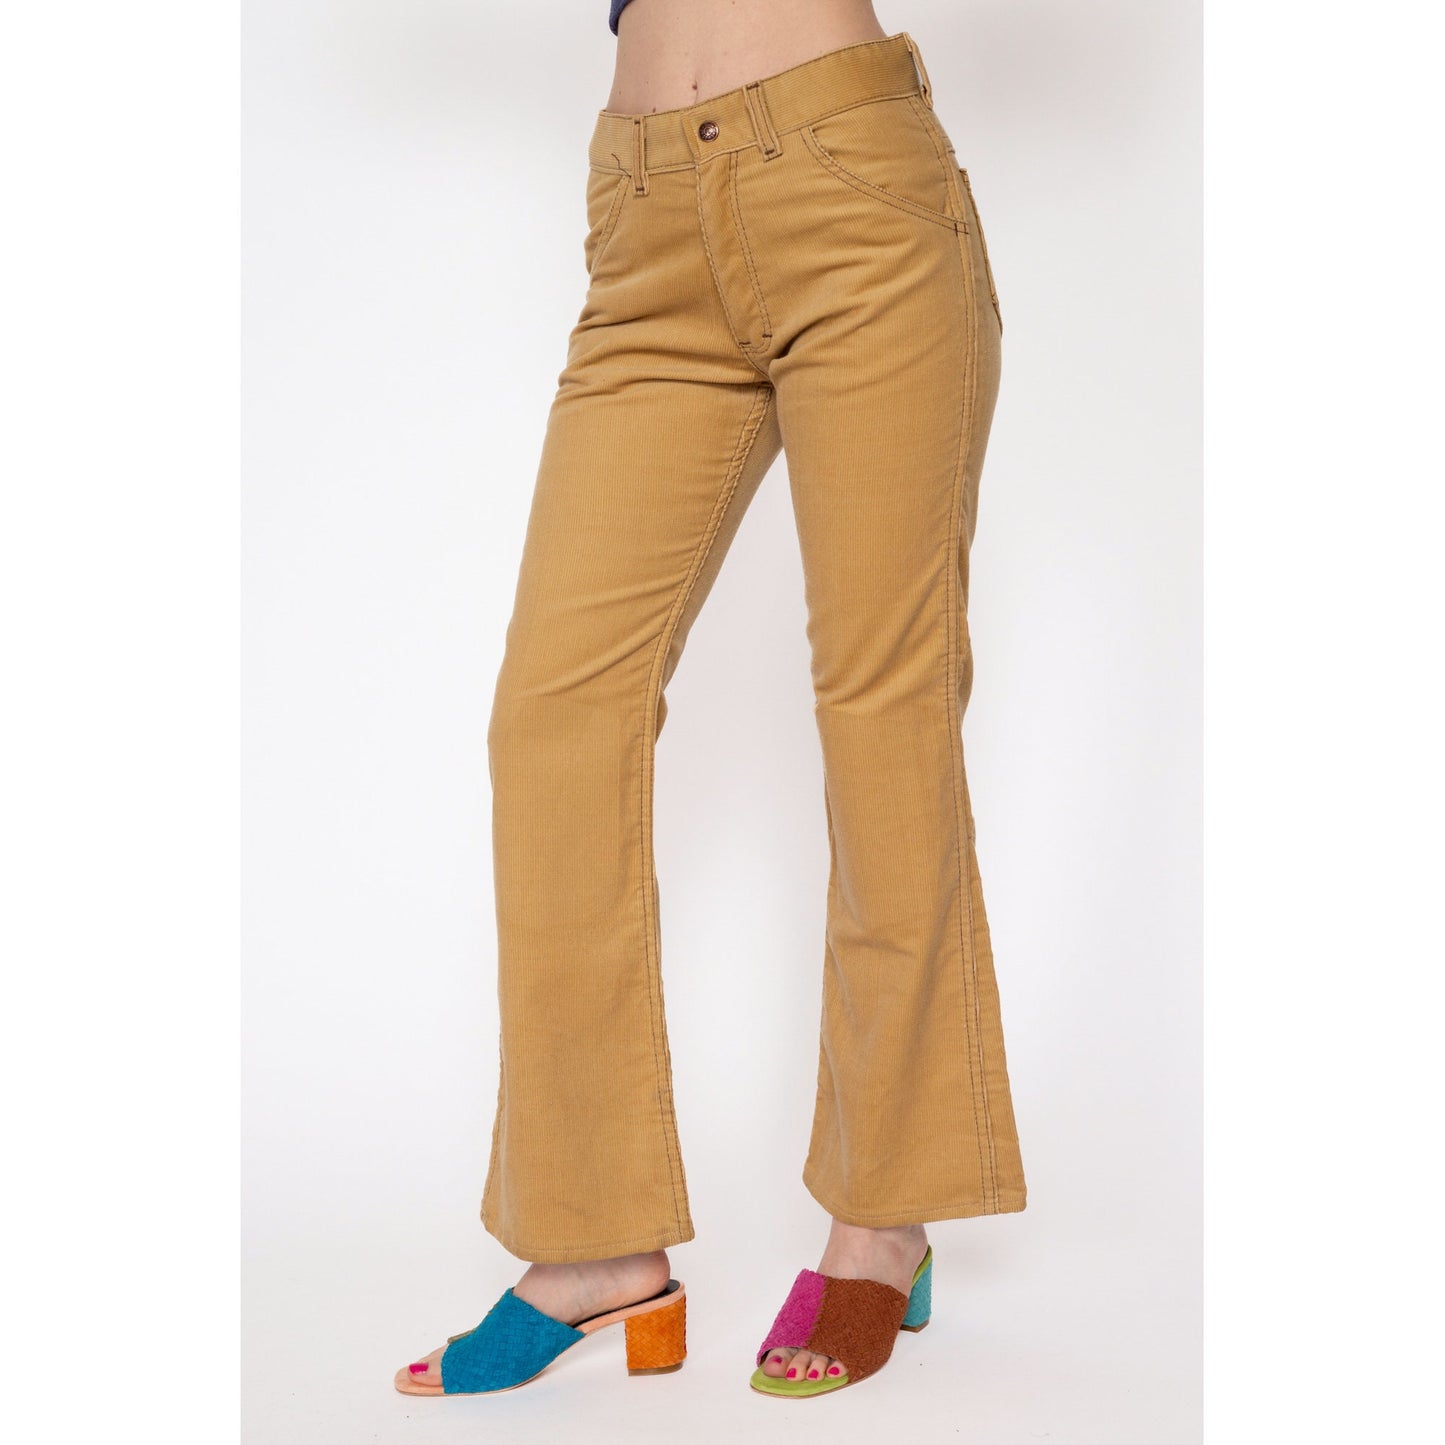 XS 70s Tan Corduroy Mid Rise Flared Pants | Vintage Sears Toughskins Cords Retro Hippie Trousers